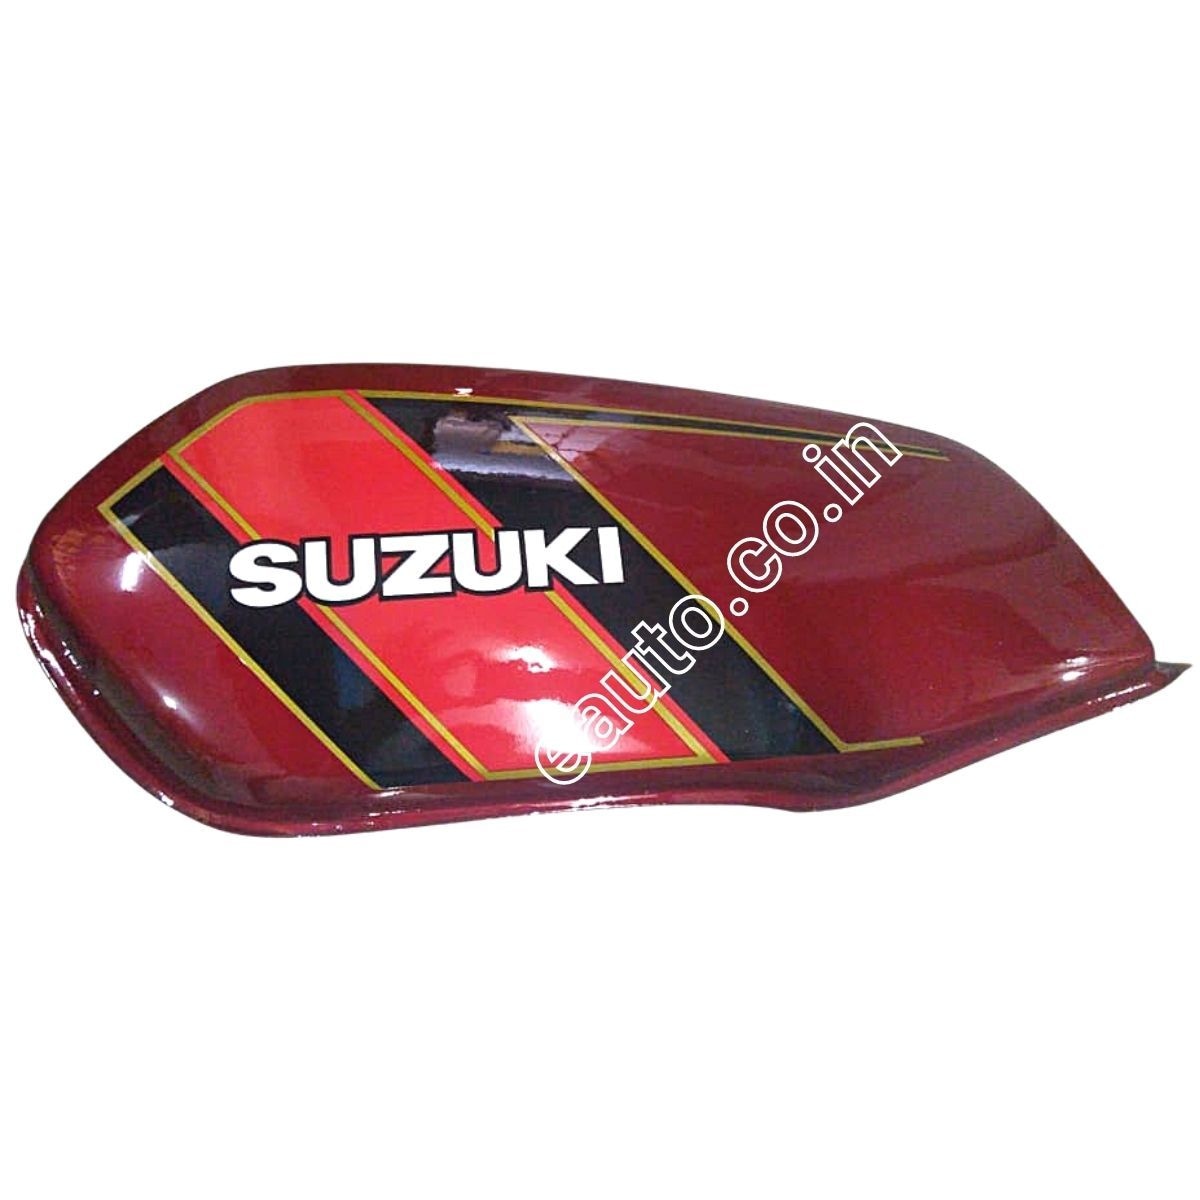 Ensons Petrol Tank for Suzuki MAX 100 (Red)